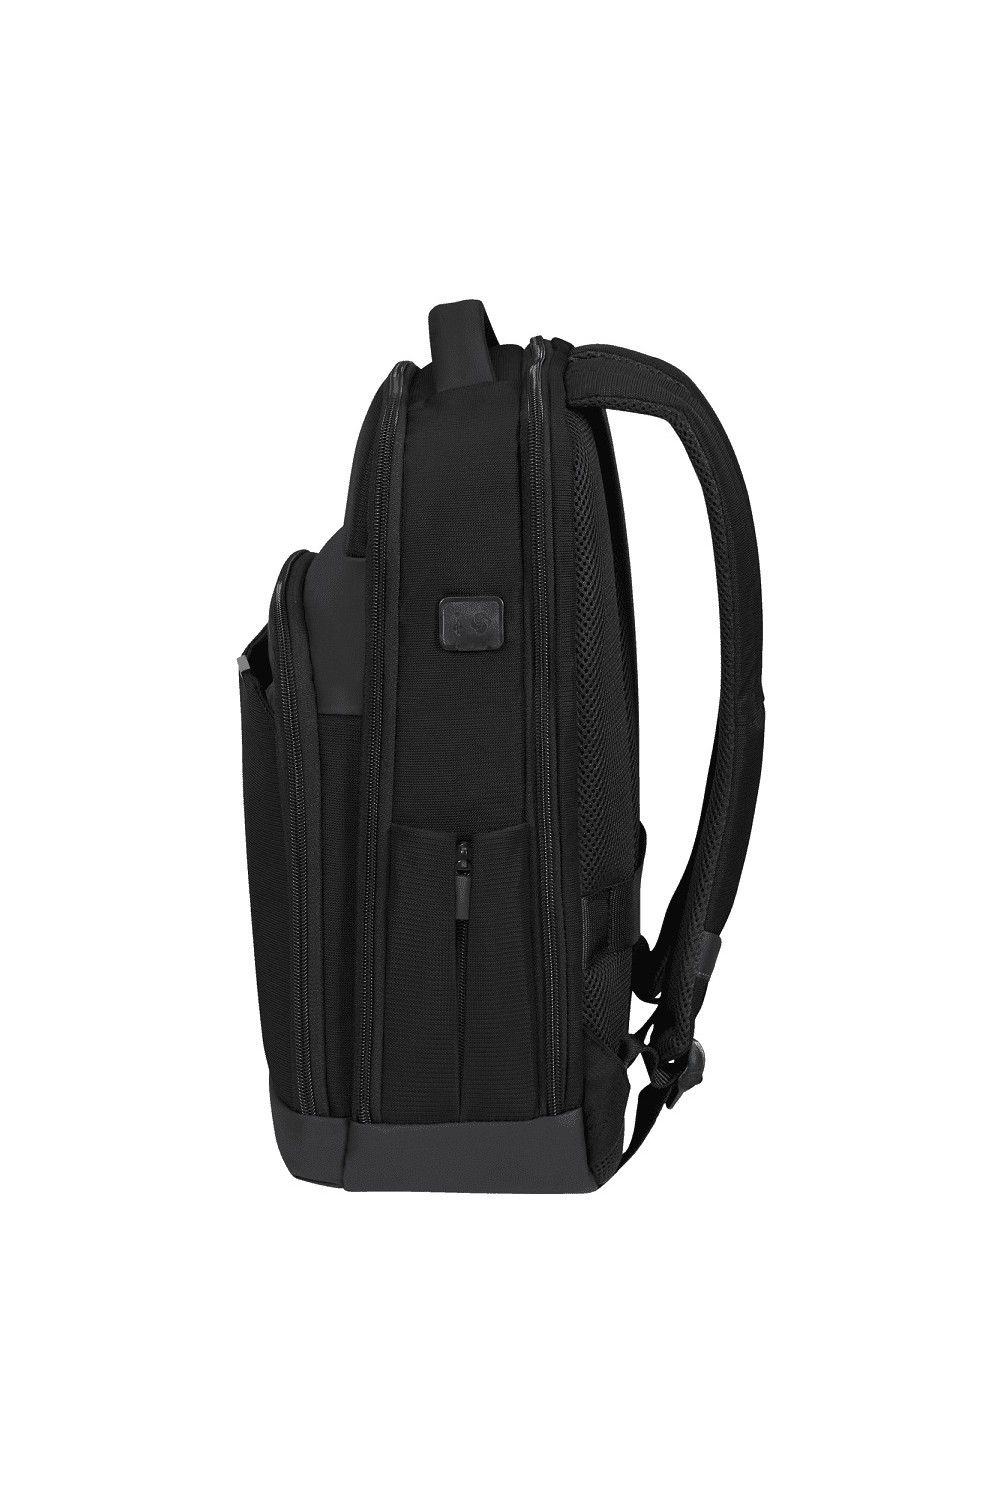 Samsonite Mysight laptop backpack 15.6 inches